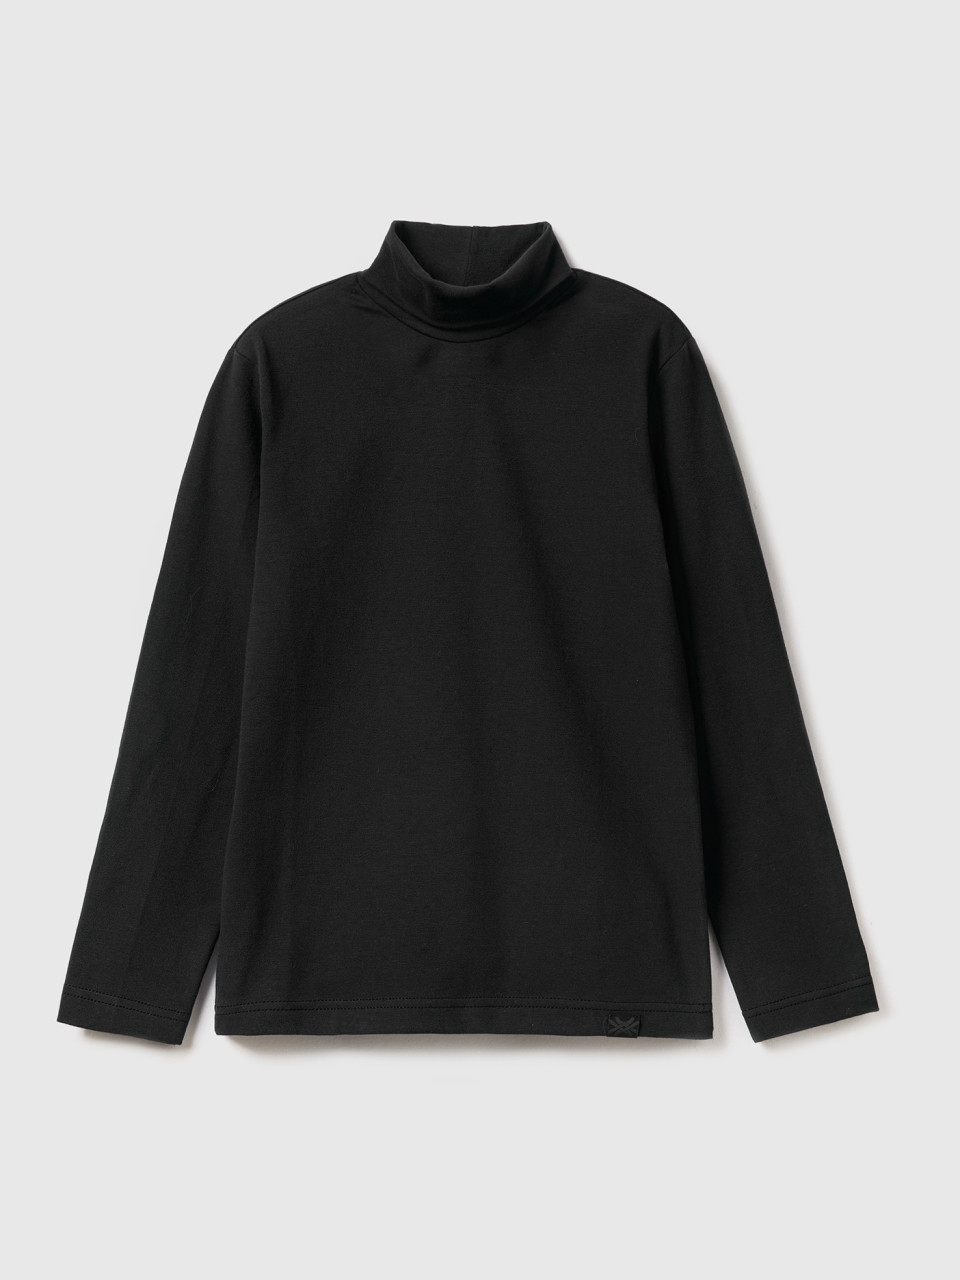 Benetton, Long Sleeve Turtleneck T-shirt, Black, Kids